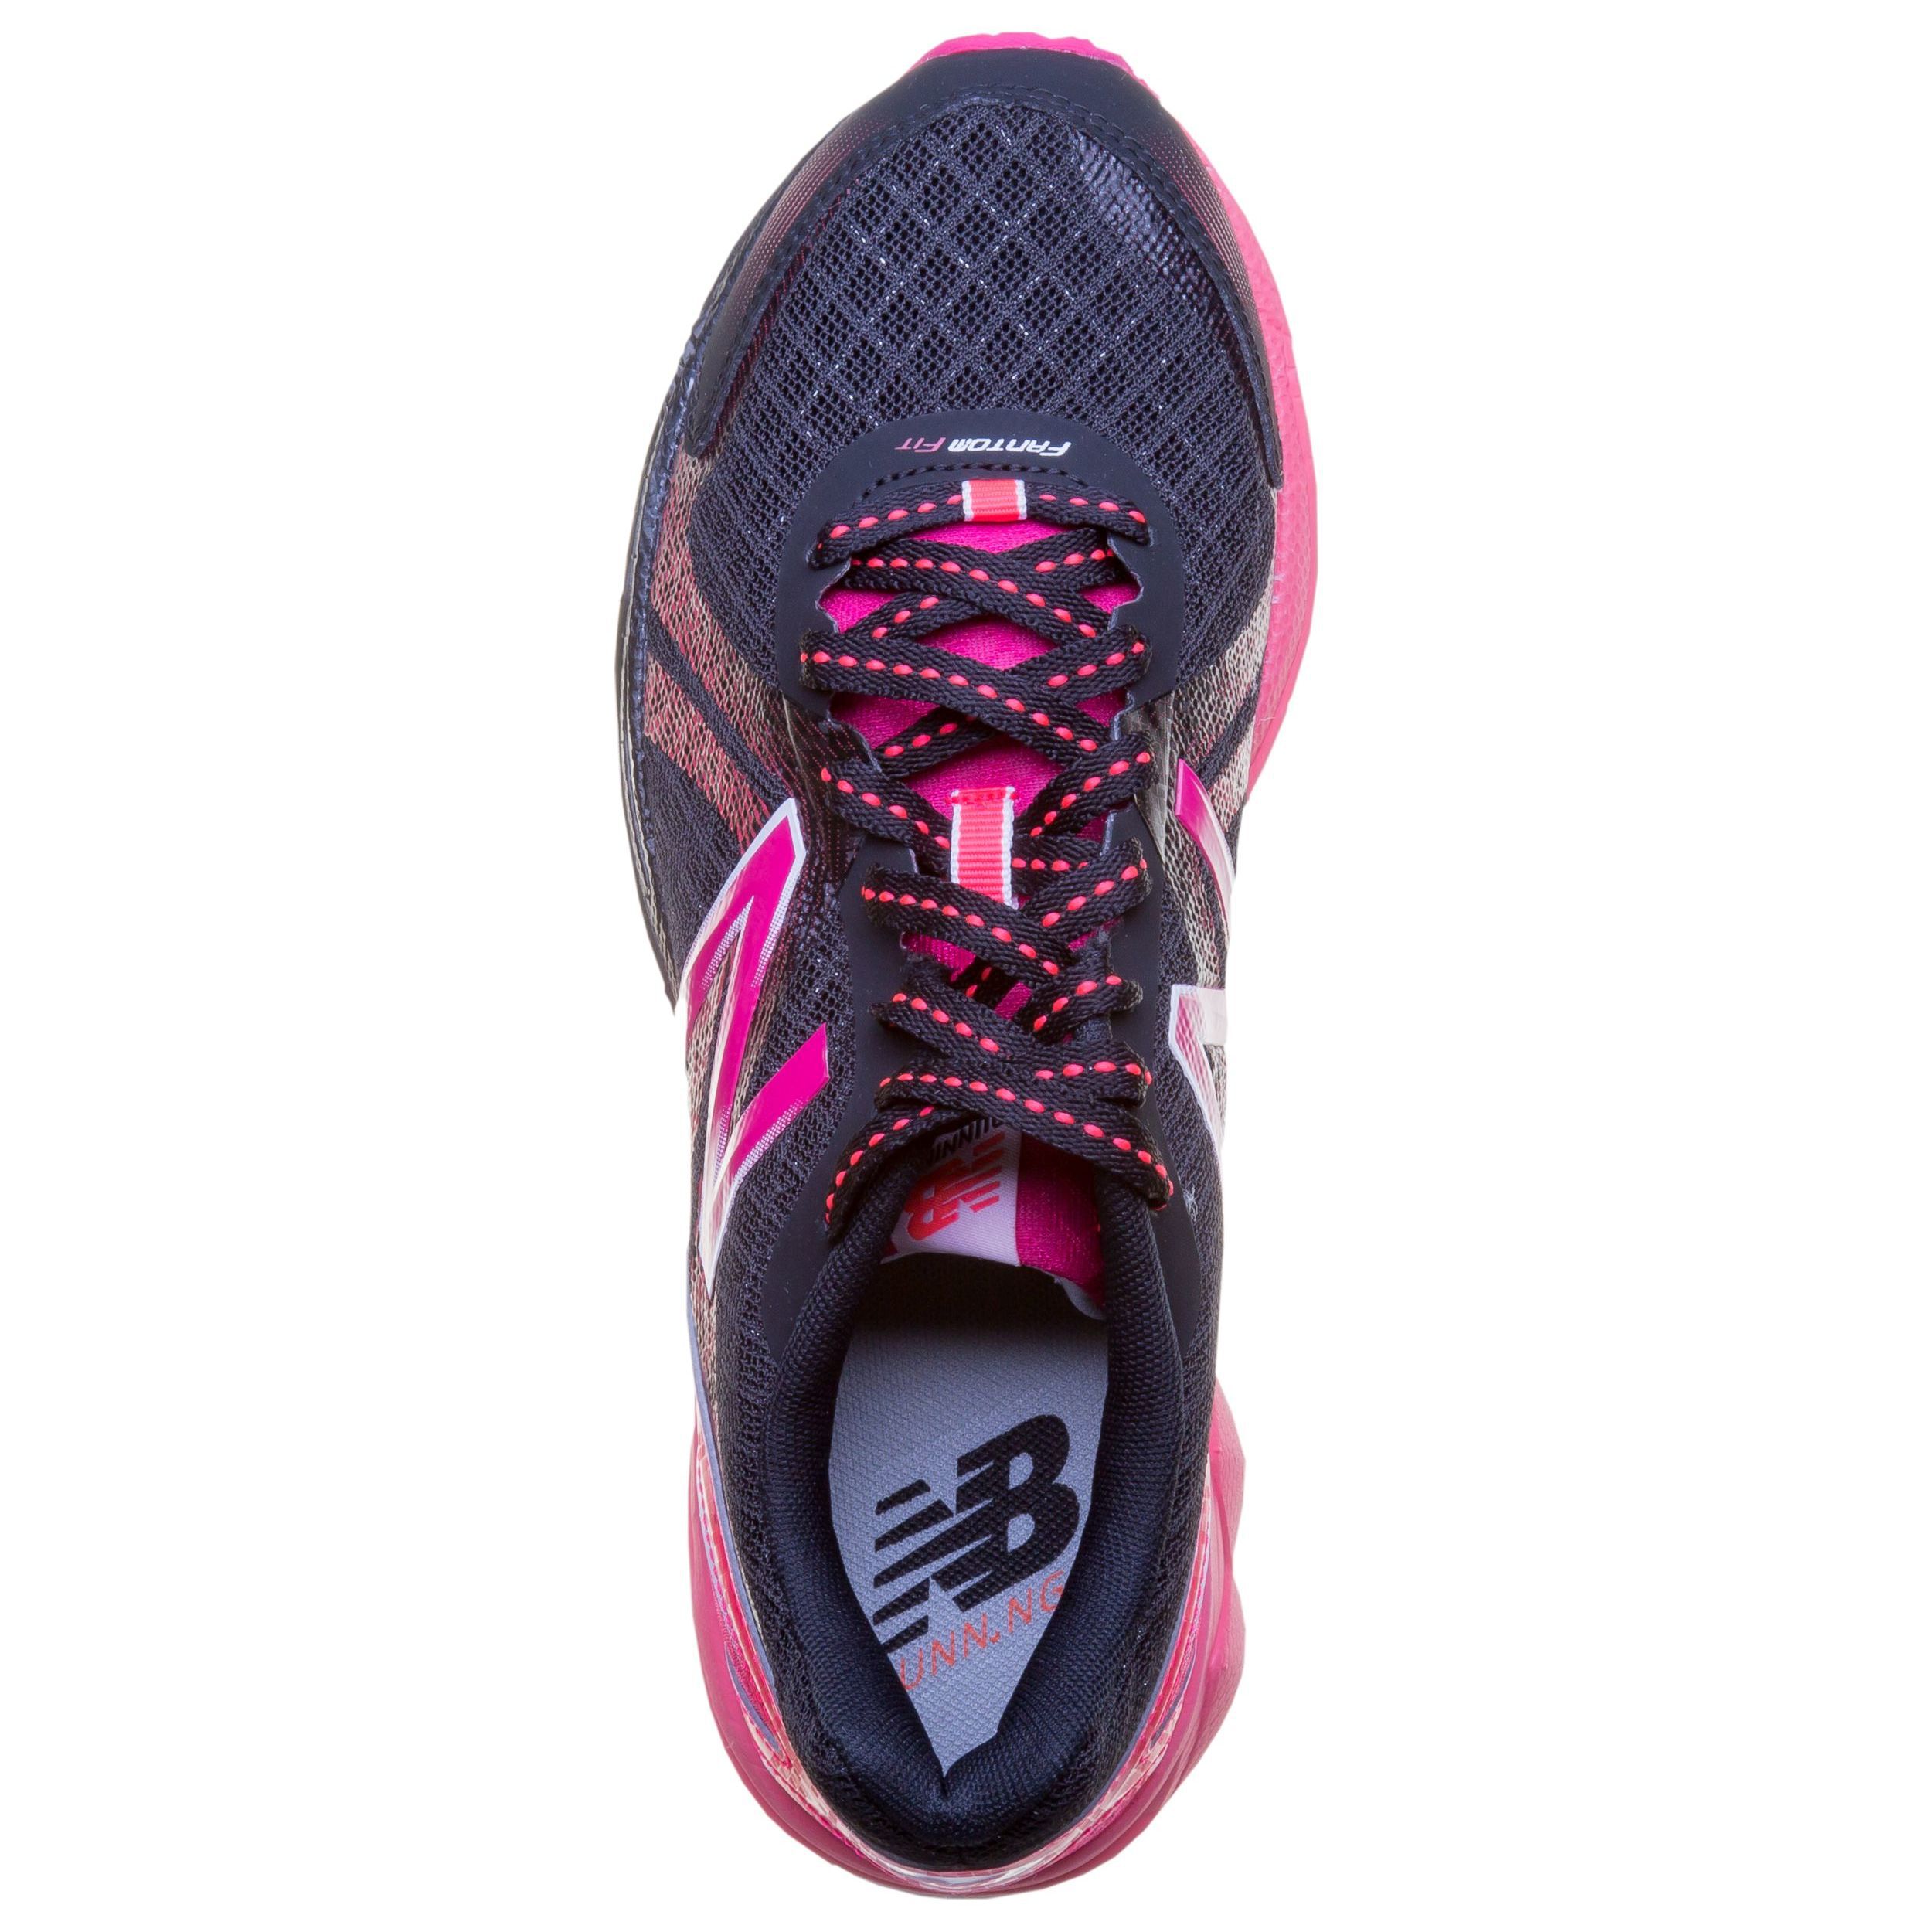 buy New Balance 790 V4 Neutral Running Shoe Women - Black, Pink online |  Jogging-Point